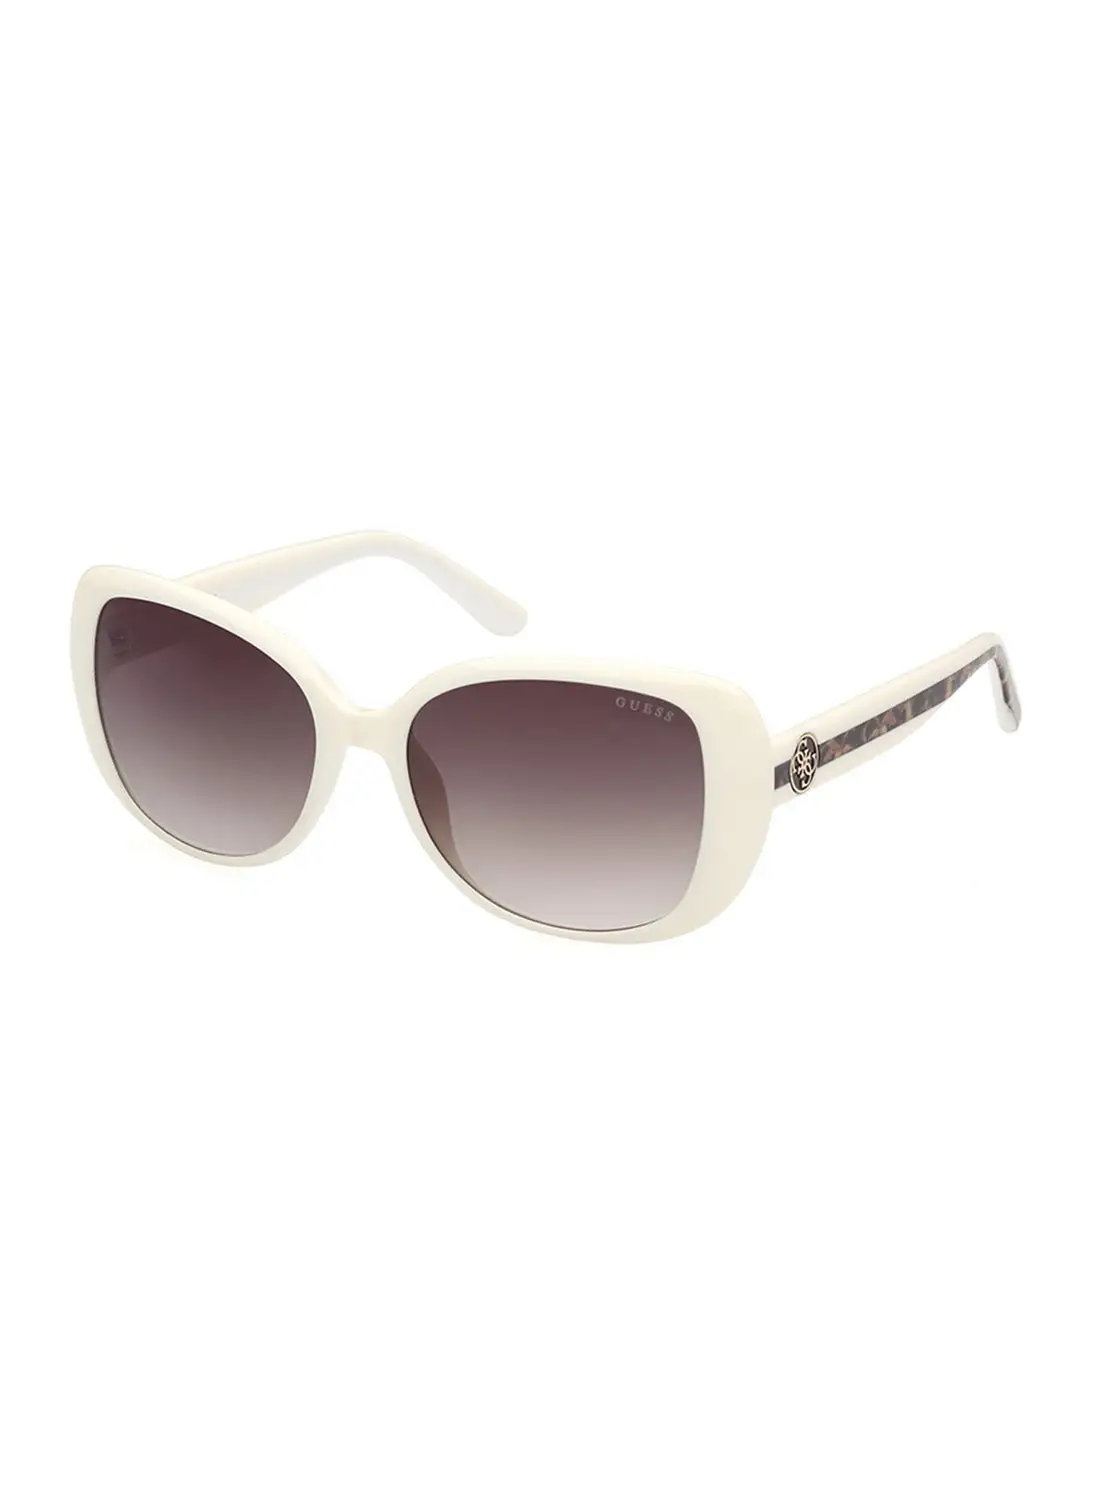 GUESS Women's UV Protection Square Shape Sunglasses - GU782225P56 - Lens Size: 56 Mm